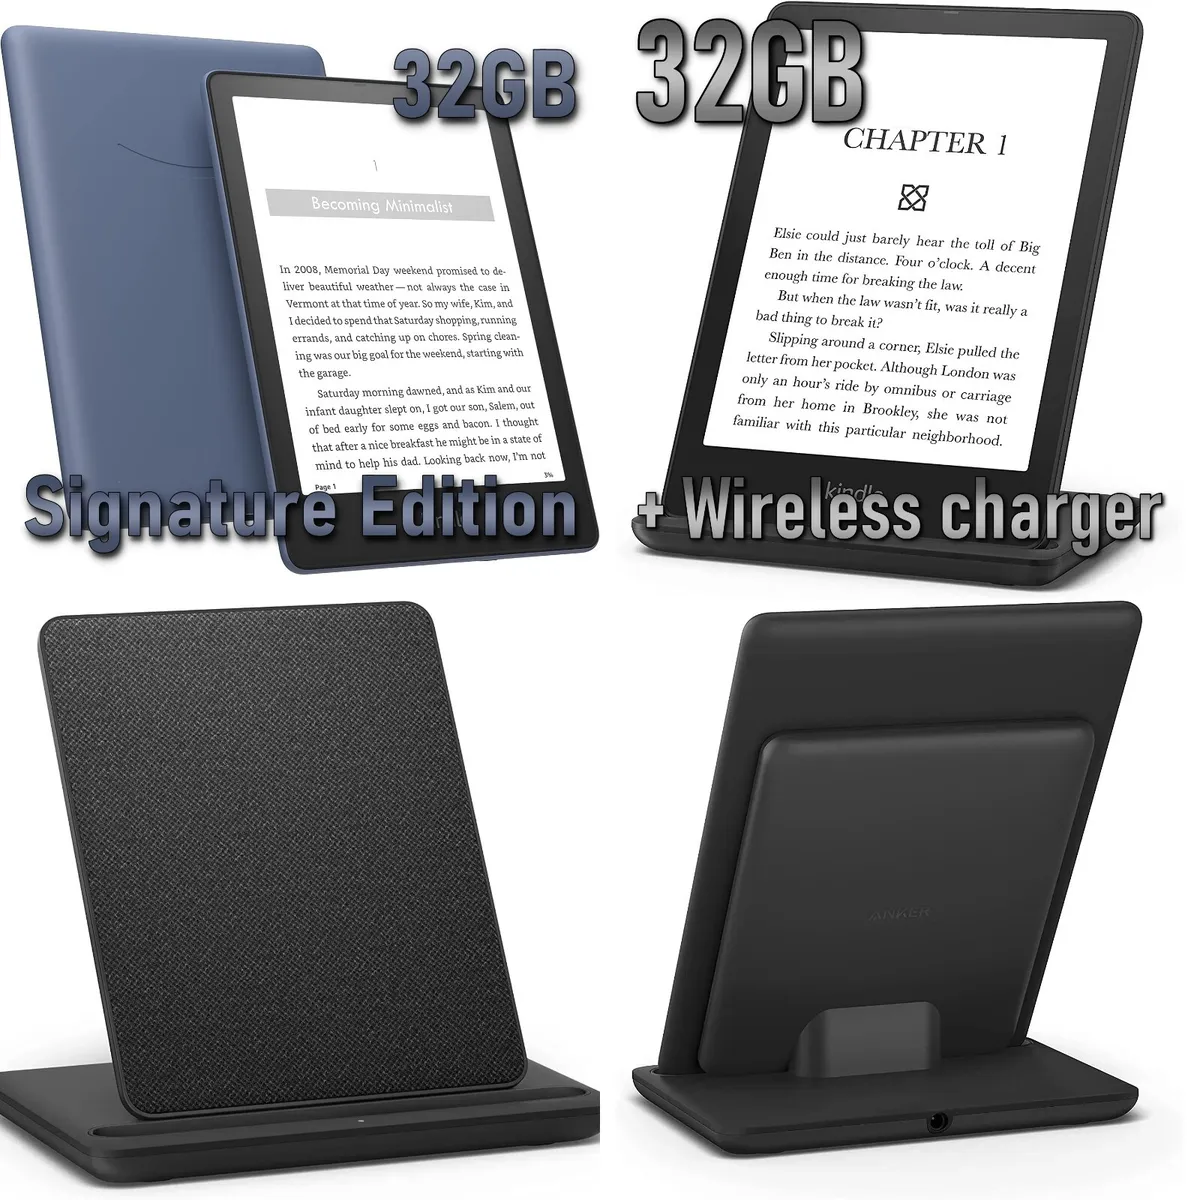 Denim blue +Wireless charger bundle) Kindle Paperwhite Signature